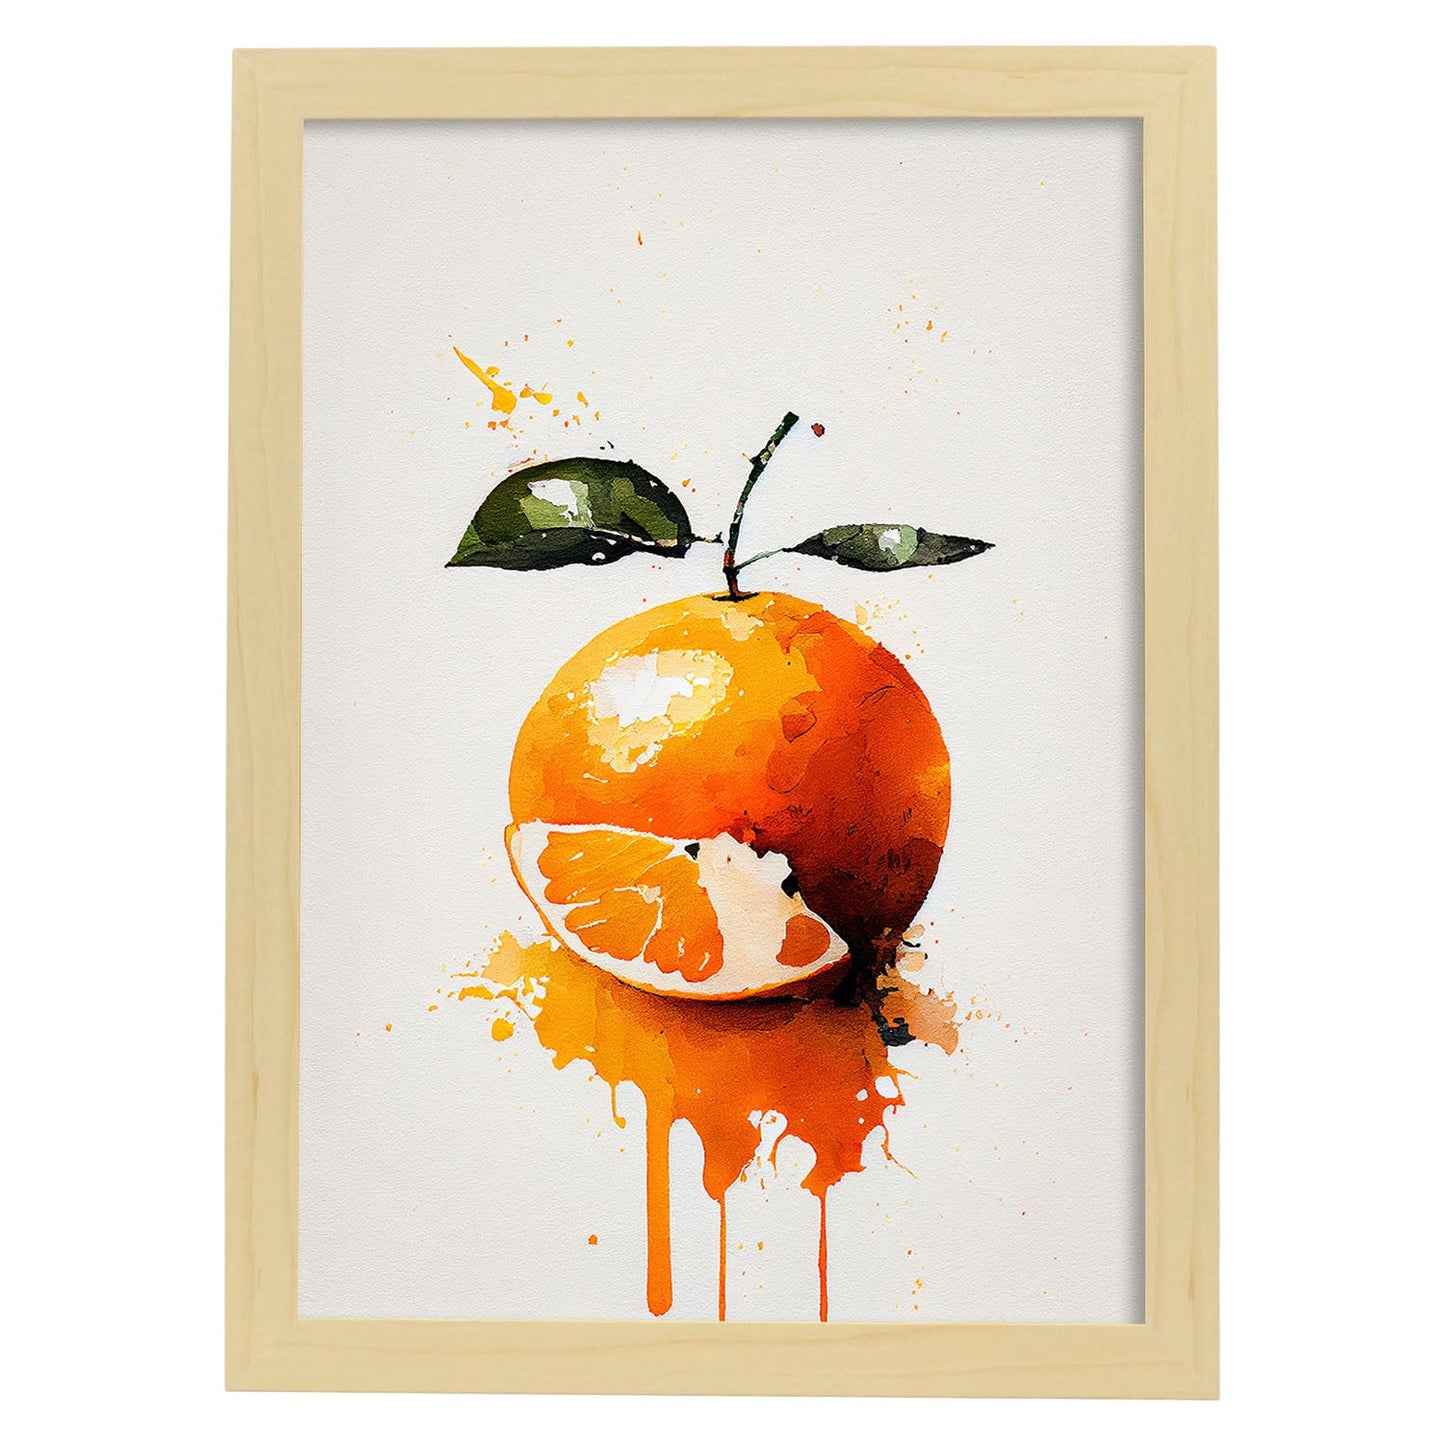 Nacnic minimalist Clementine. Aesthetic Wall Art Prints for Bedroom or Living Room Design.-Artwork-Nacnic-A4-Marco Madera Clara-Nacnic Estudio SL